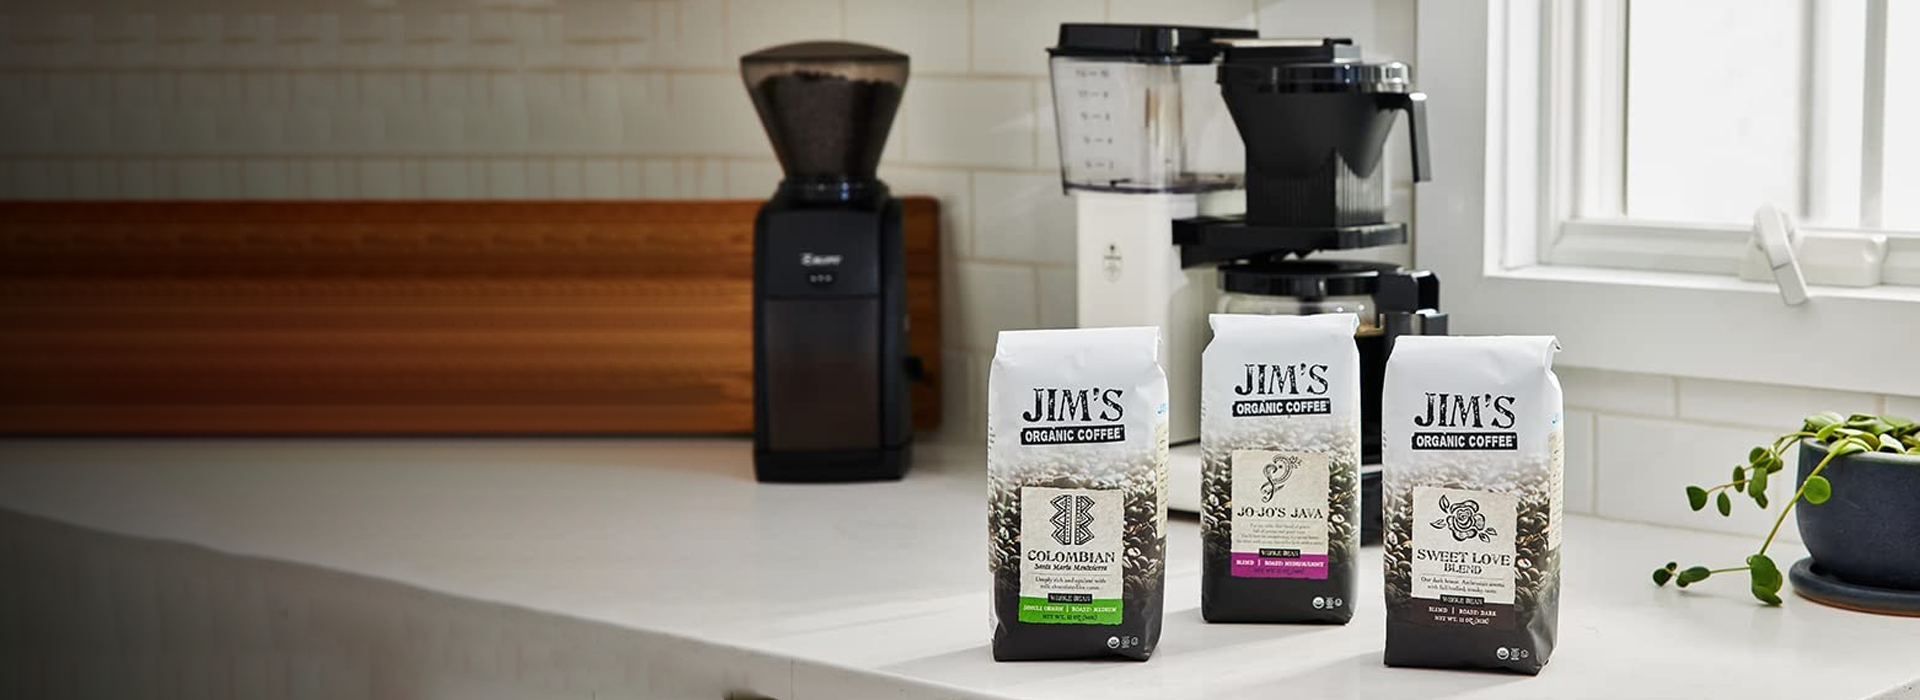 Jim’s Organic Coffee – Sweet Love Blend – Whole Bean, Dark Roast, Bold 11 oz Bag